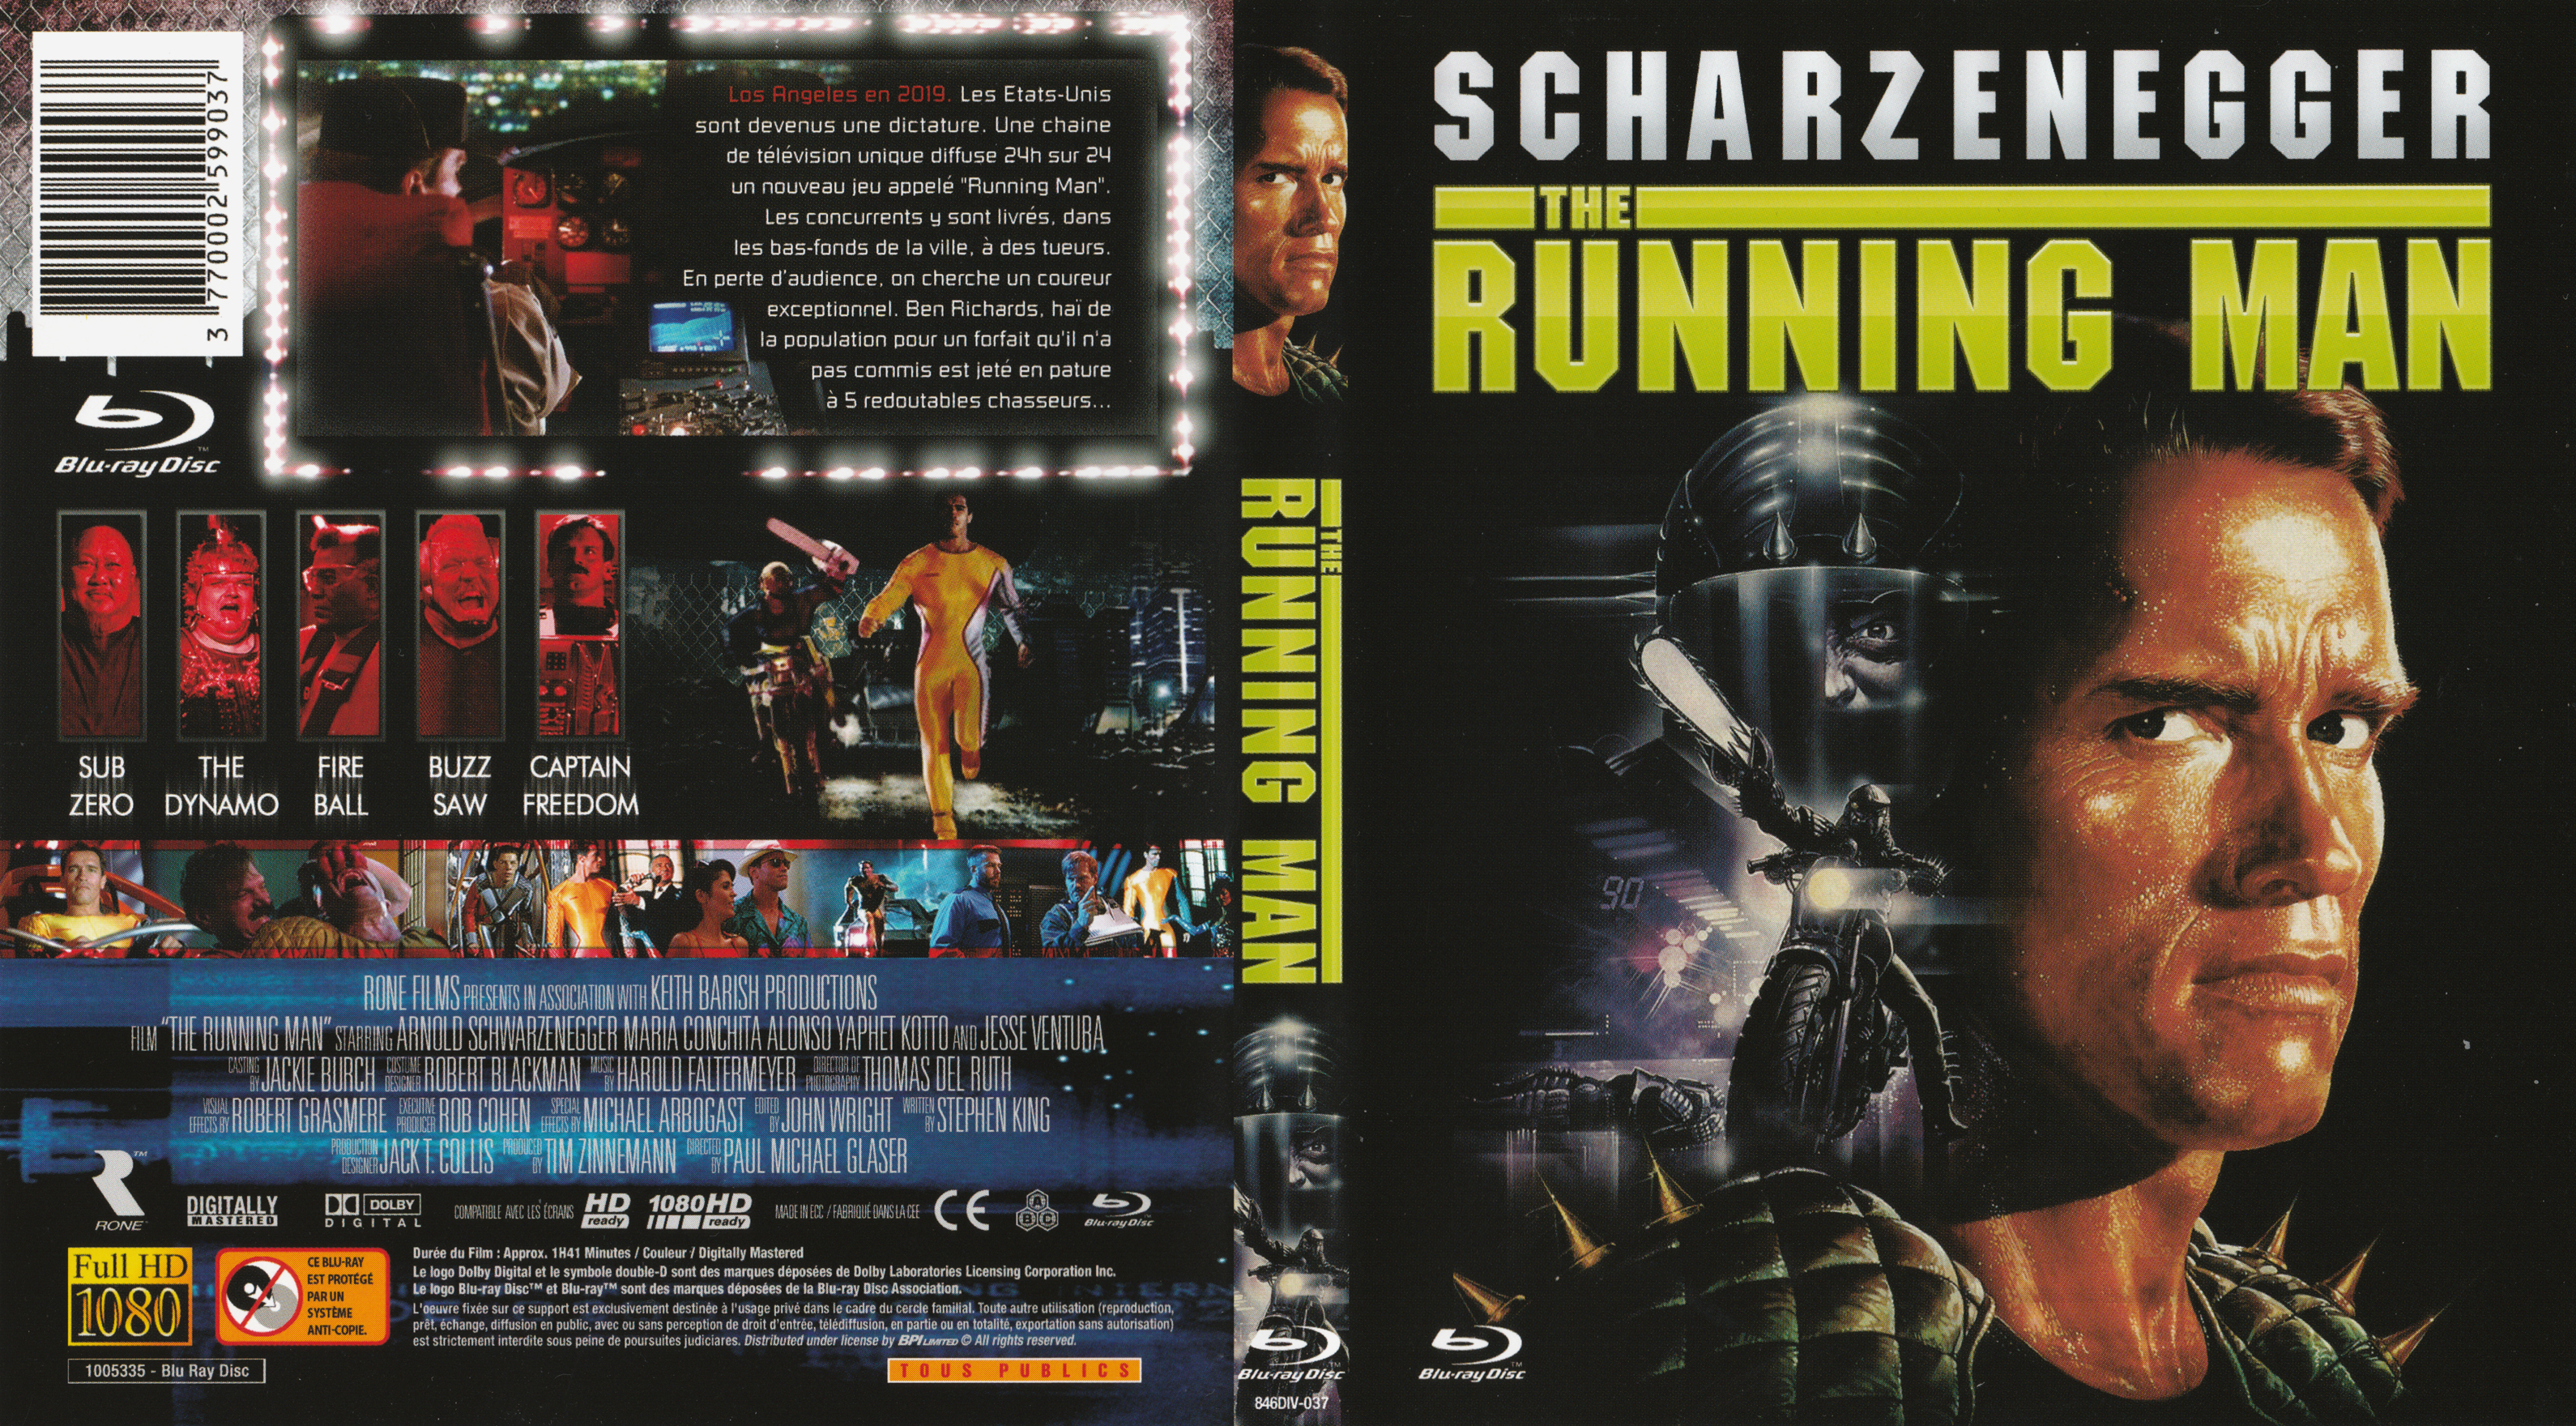 Jaquette DVD The running man (BLU-RAY) v2